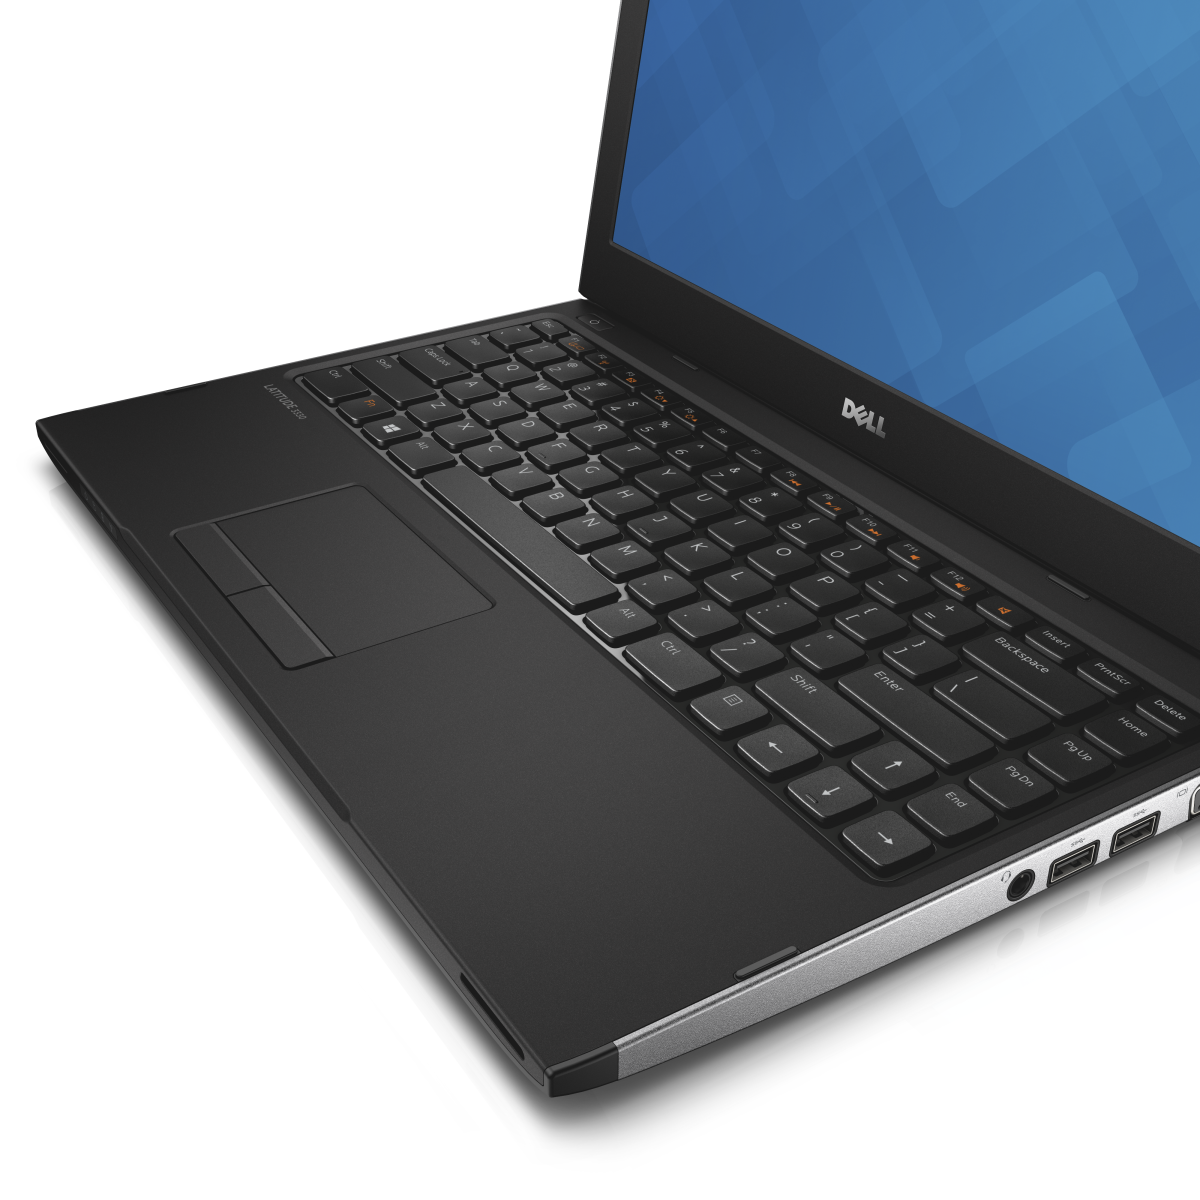 Dell announces 13.3-inch Latitude 3330 notebook - NotebookCheck 